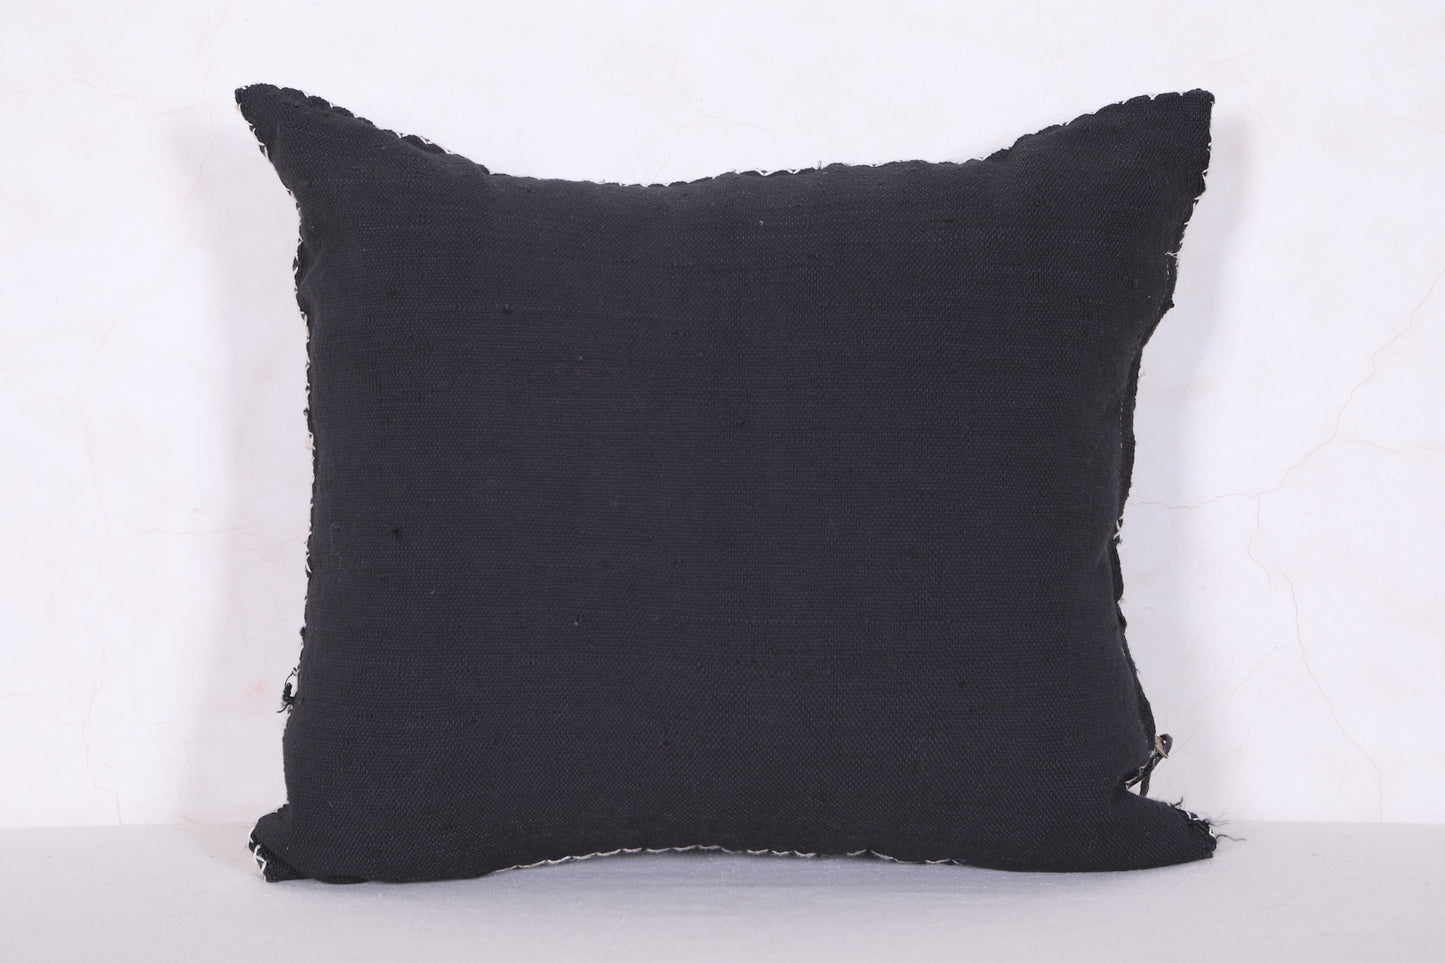 Black Kilim Pillow 14.5 INCHES X 17.3 INCHES